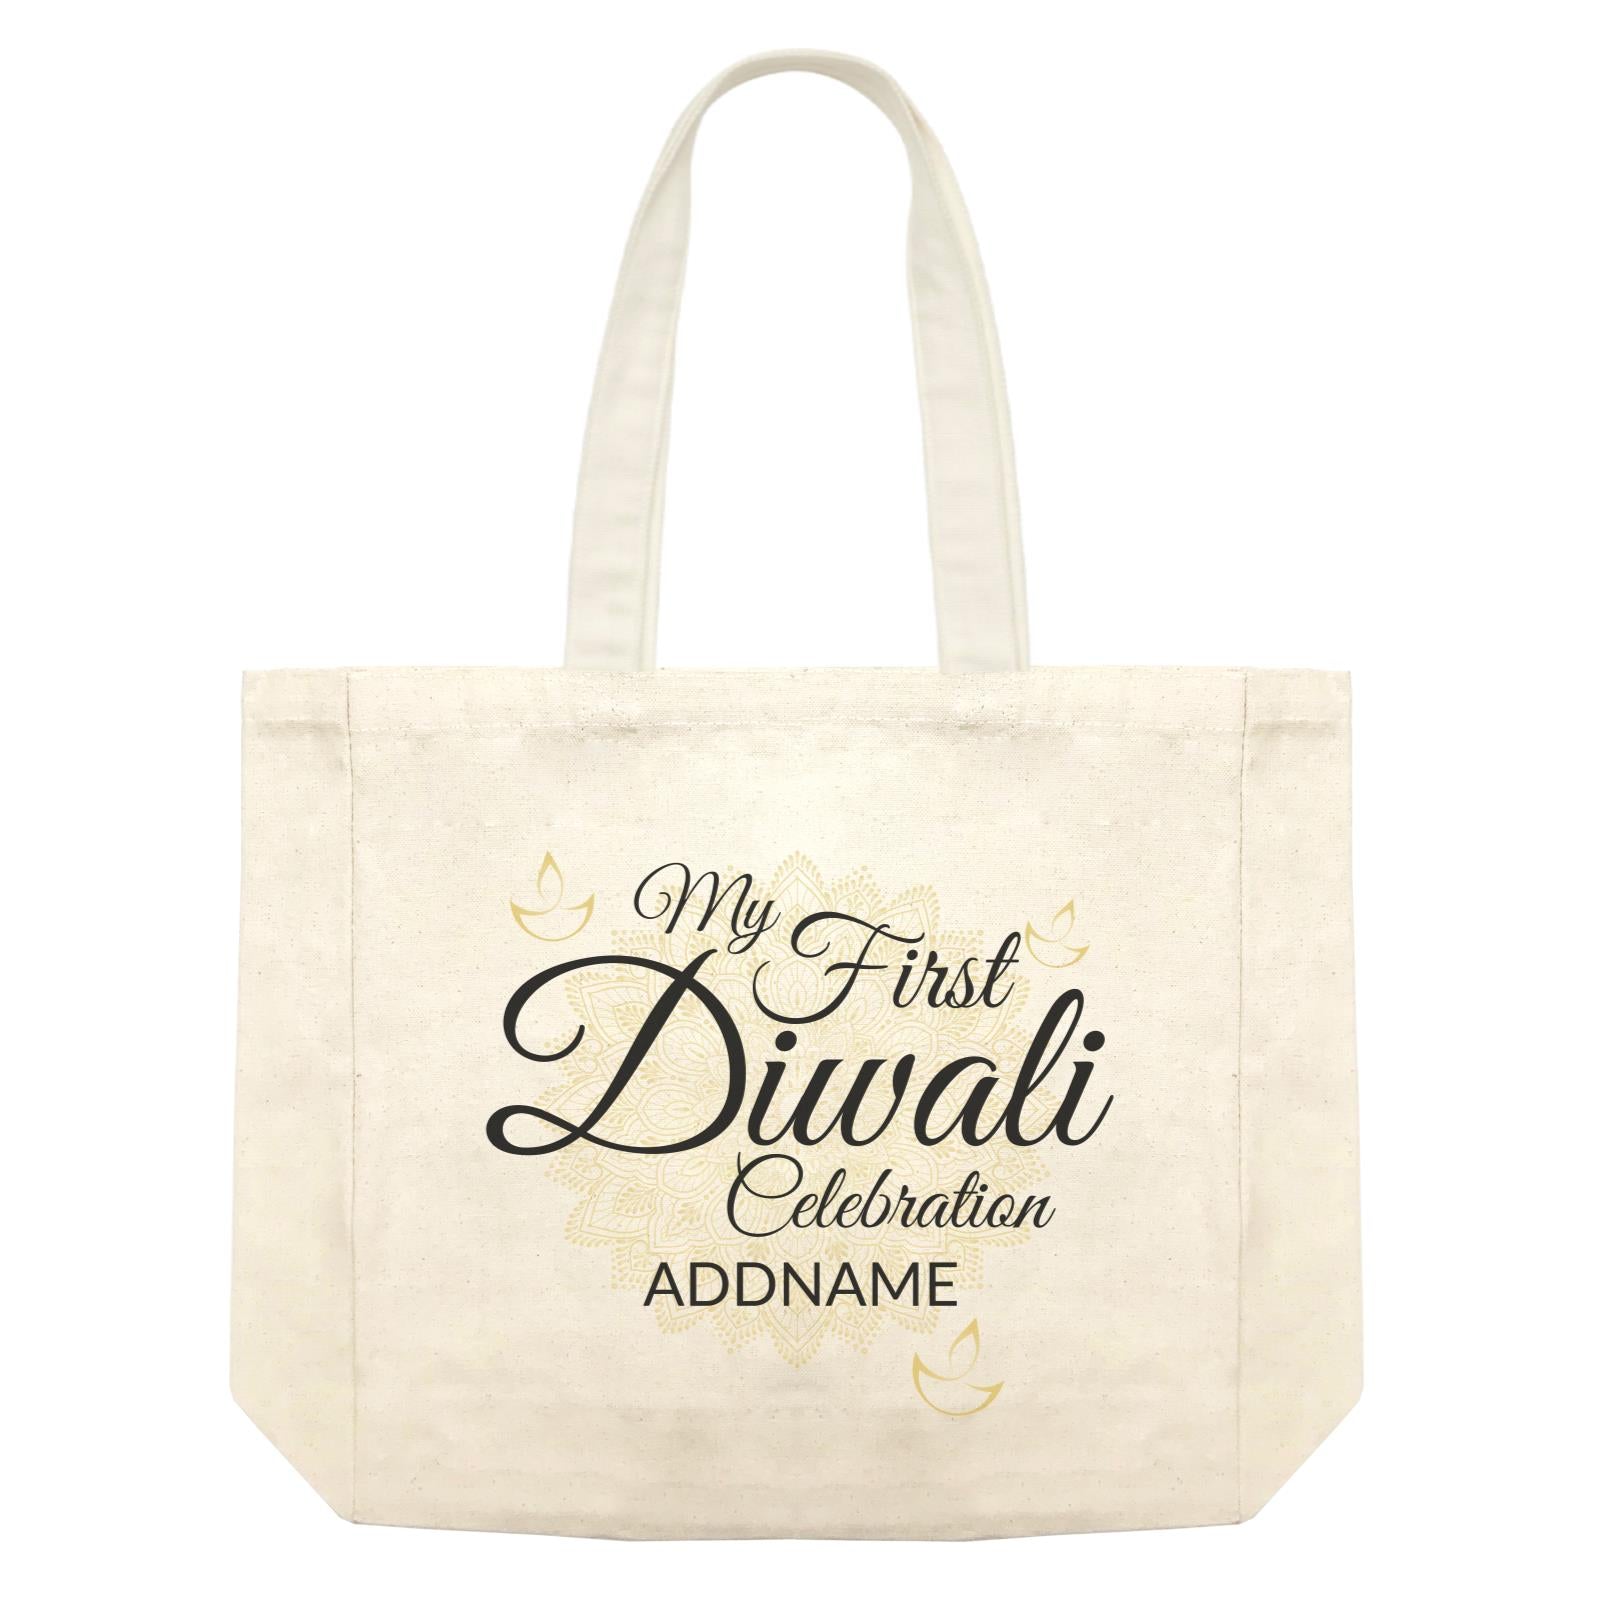 My First Diwali Celebration with Mandala Addname Shopping Bag